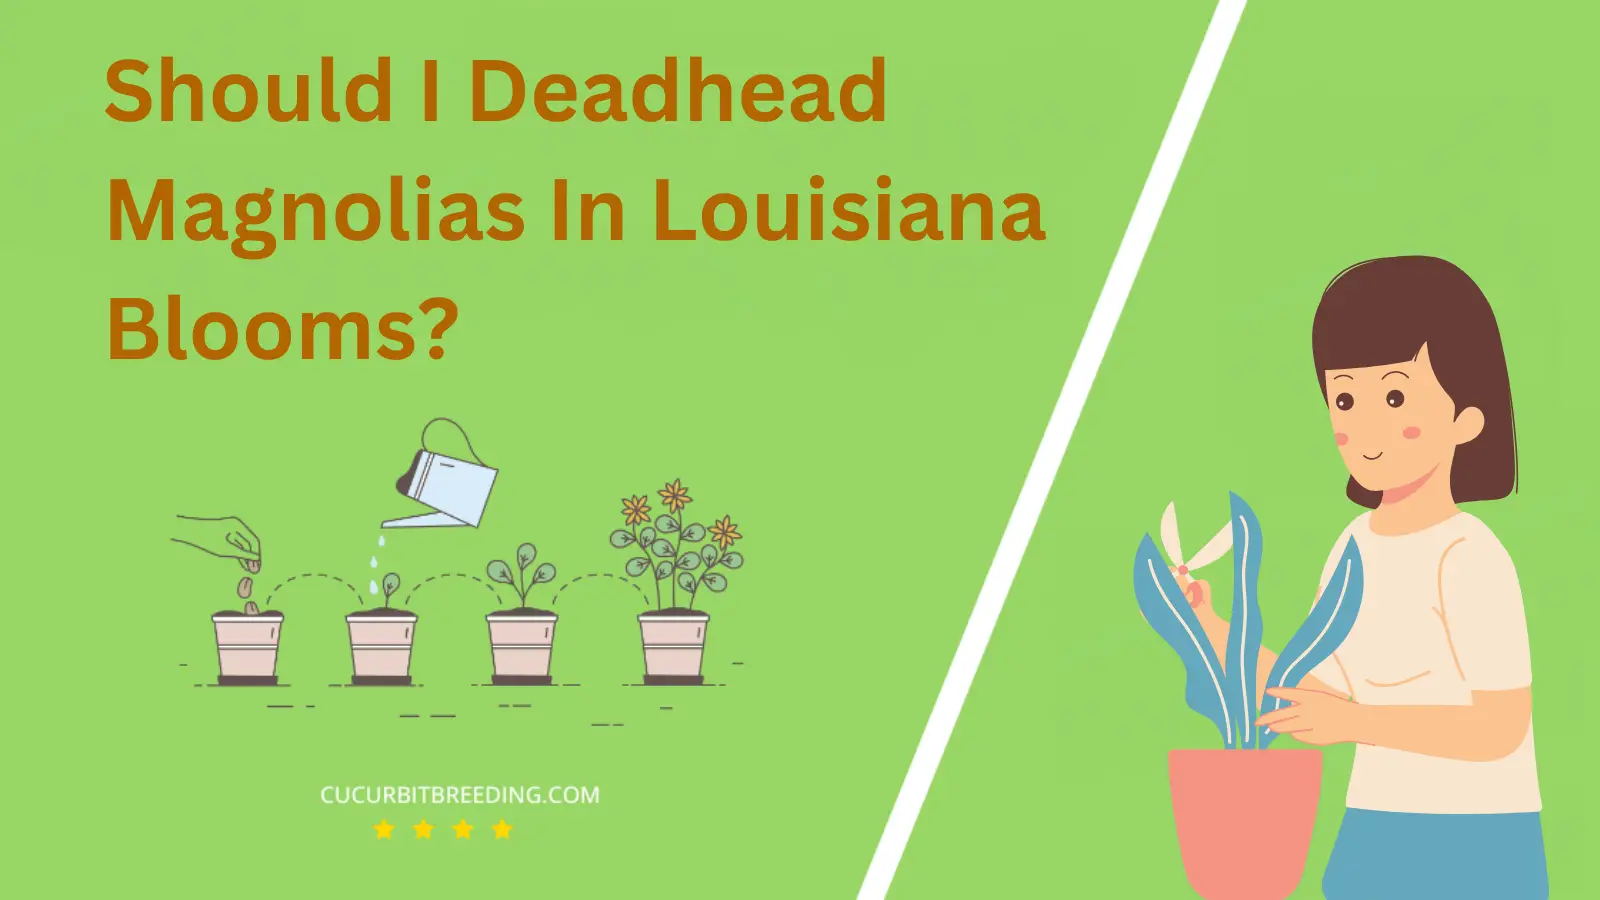 Should I Deadhead Magnolias In Louisiana Blooms?